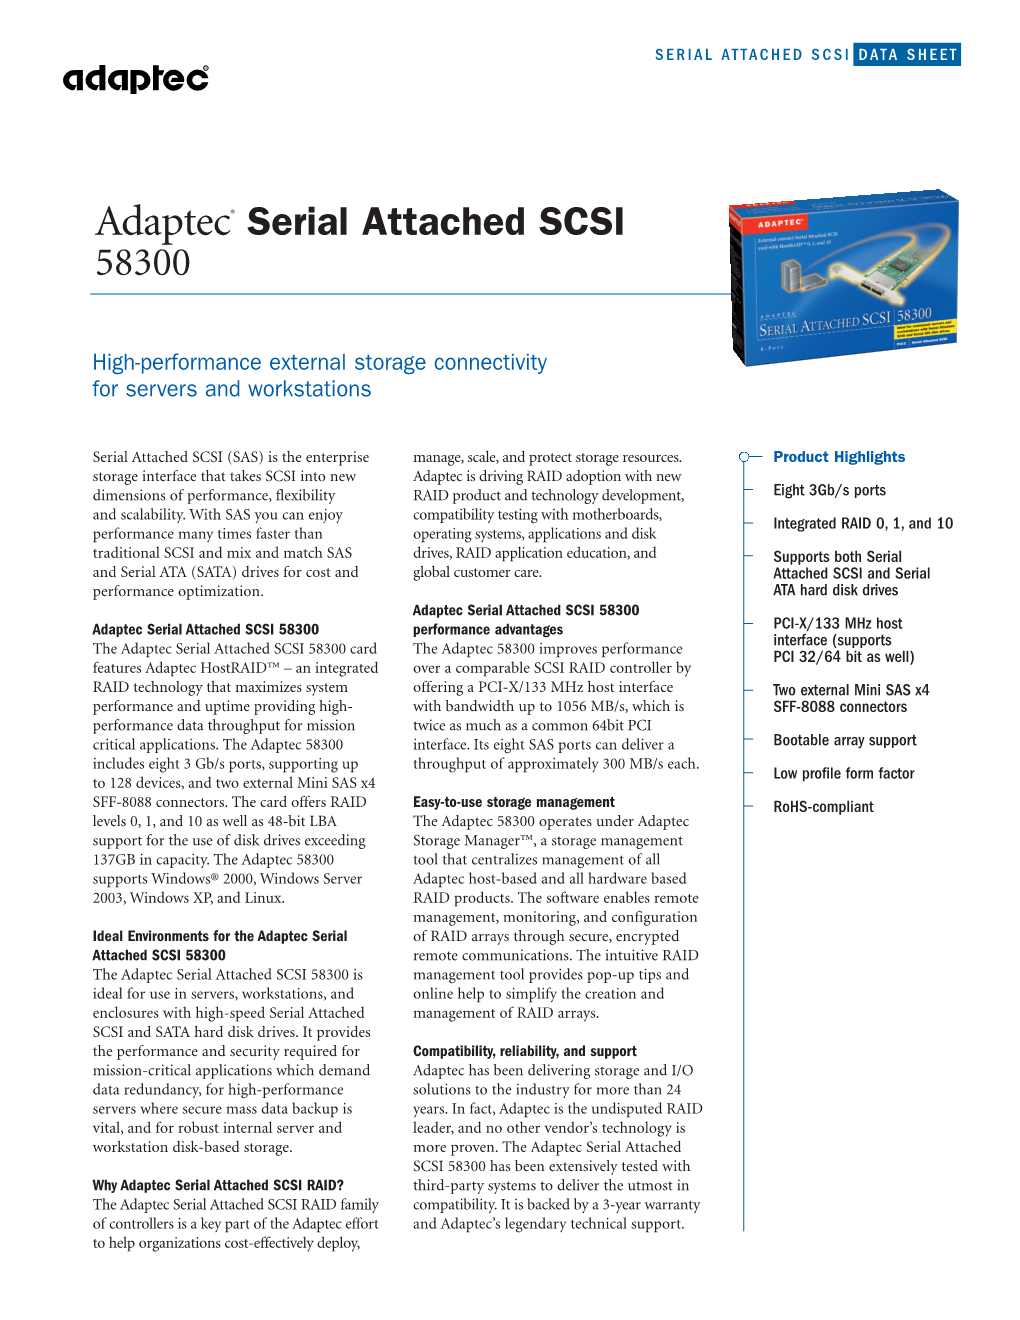 Adaptec® Serial Attached SCSI 58300